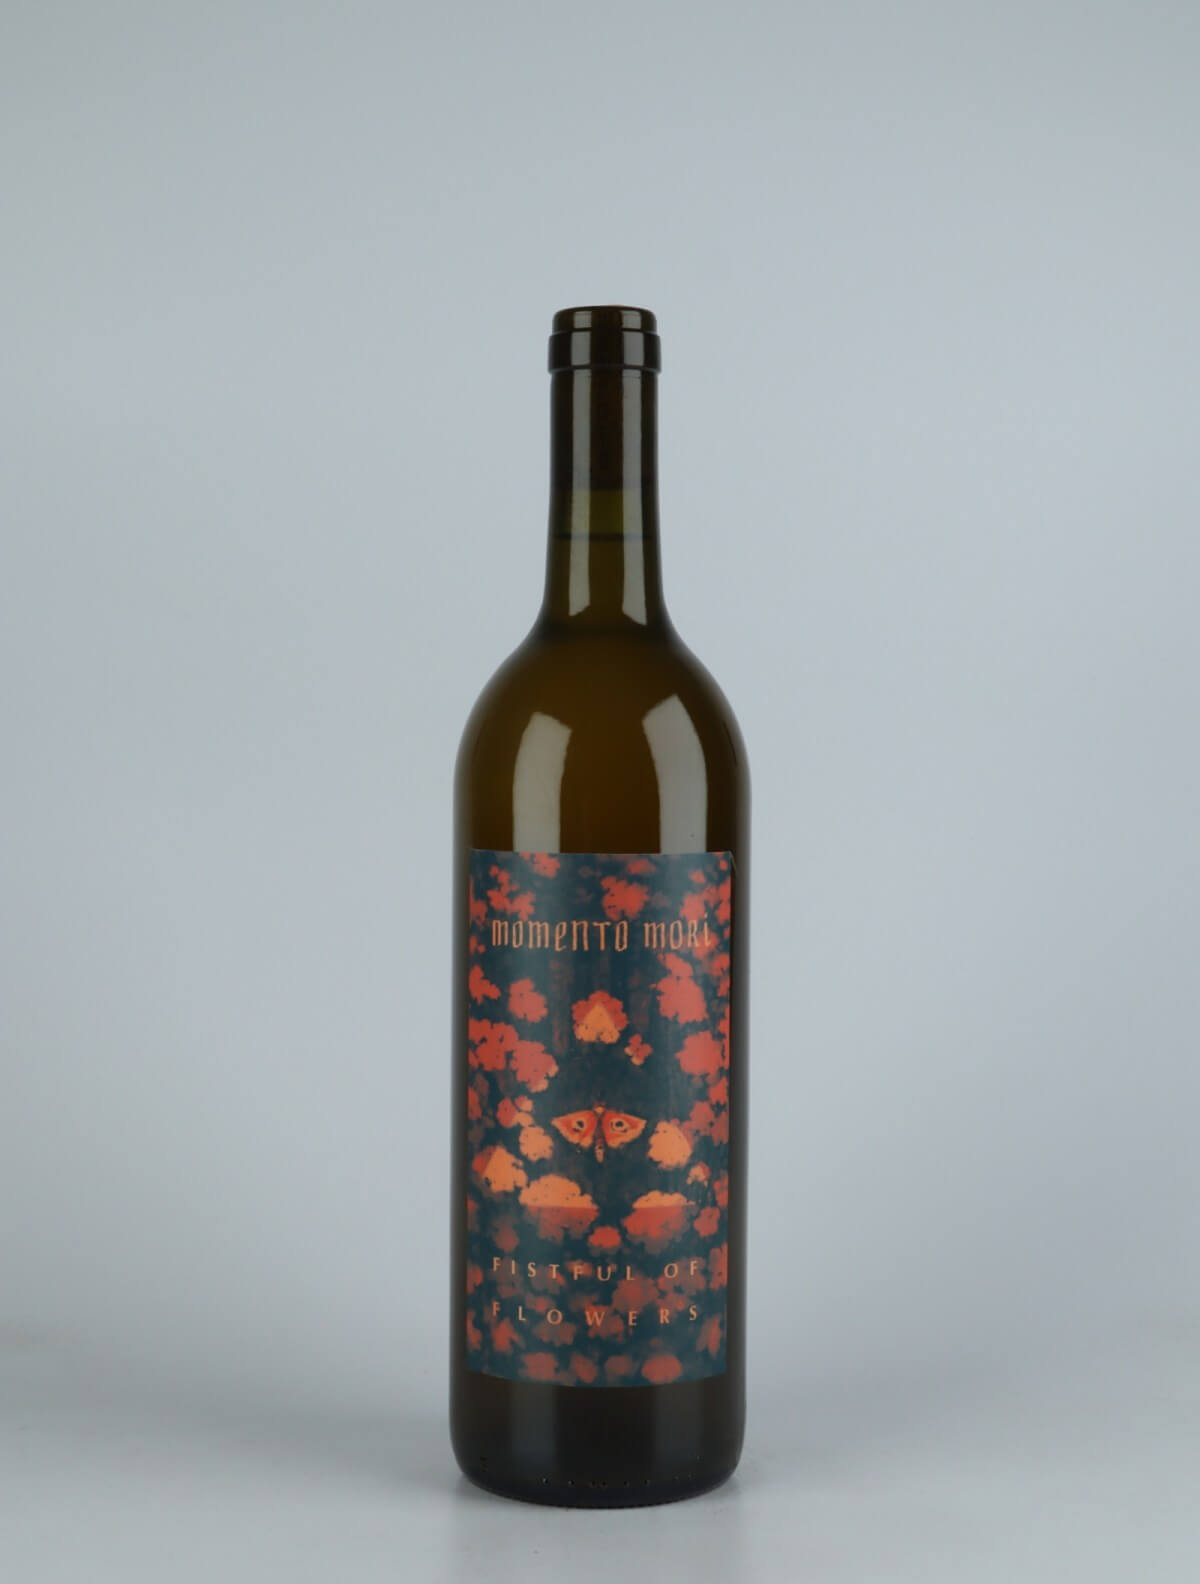 A bottle 2021 Fistful of Flowers Orange wine from Momento Mori, Victoria in 